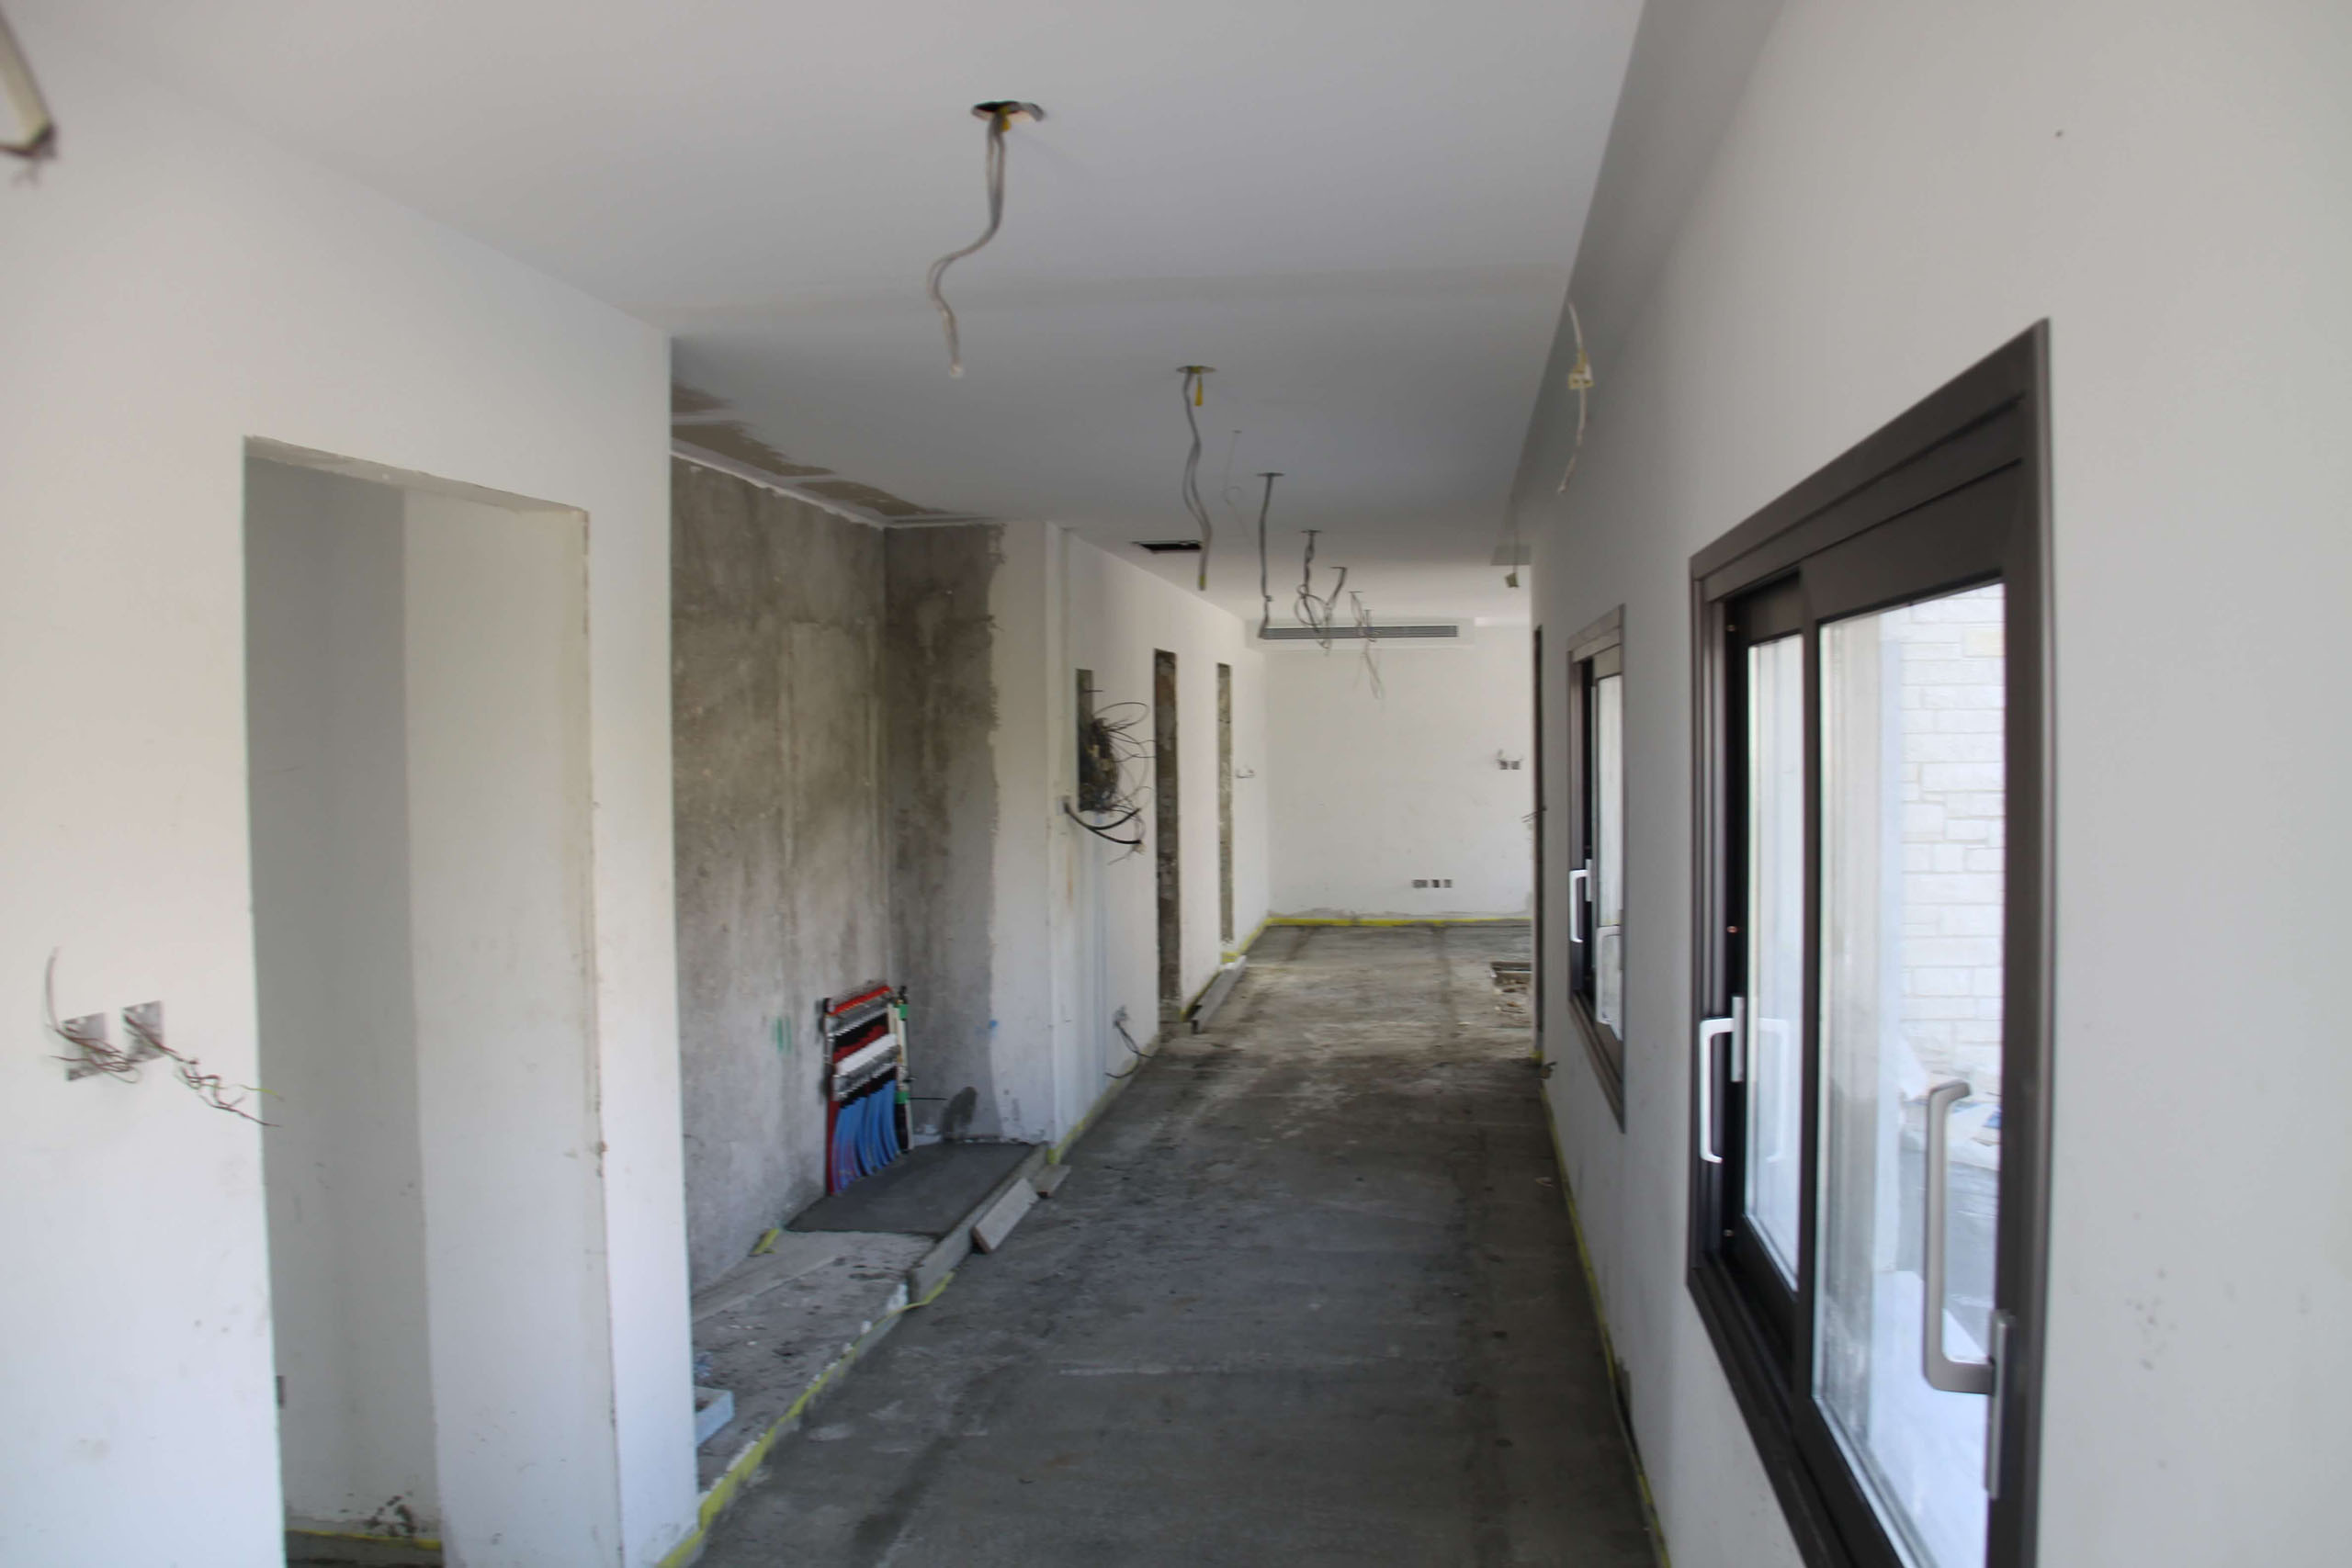 Corridor Before